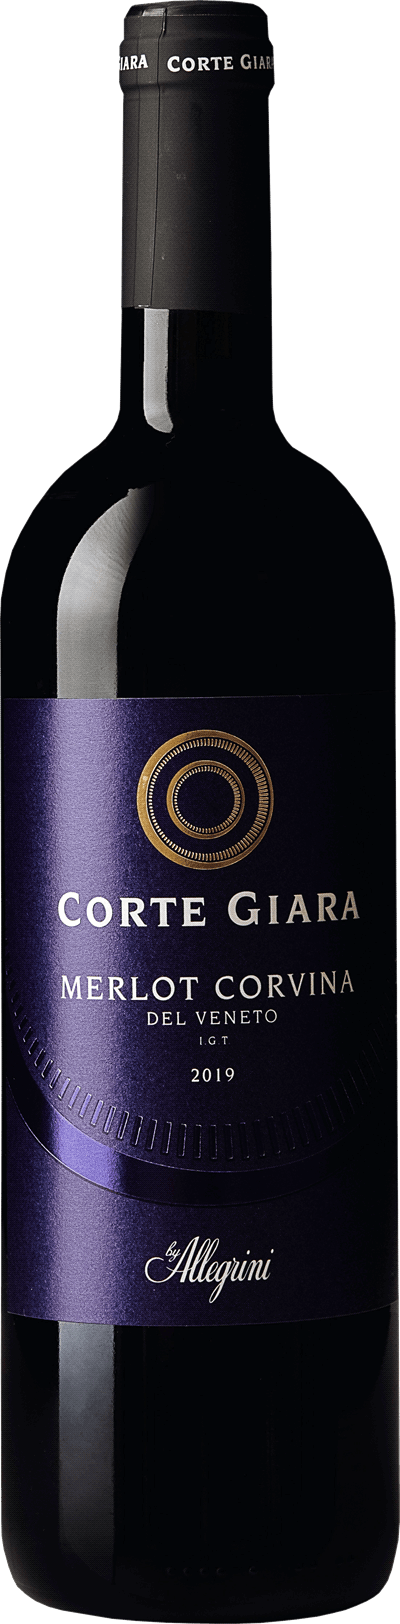 Corte Giara Merlot Corvina